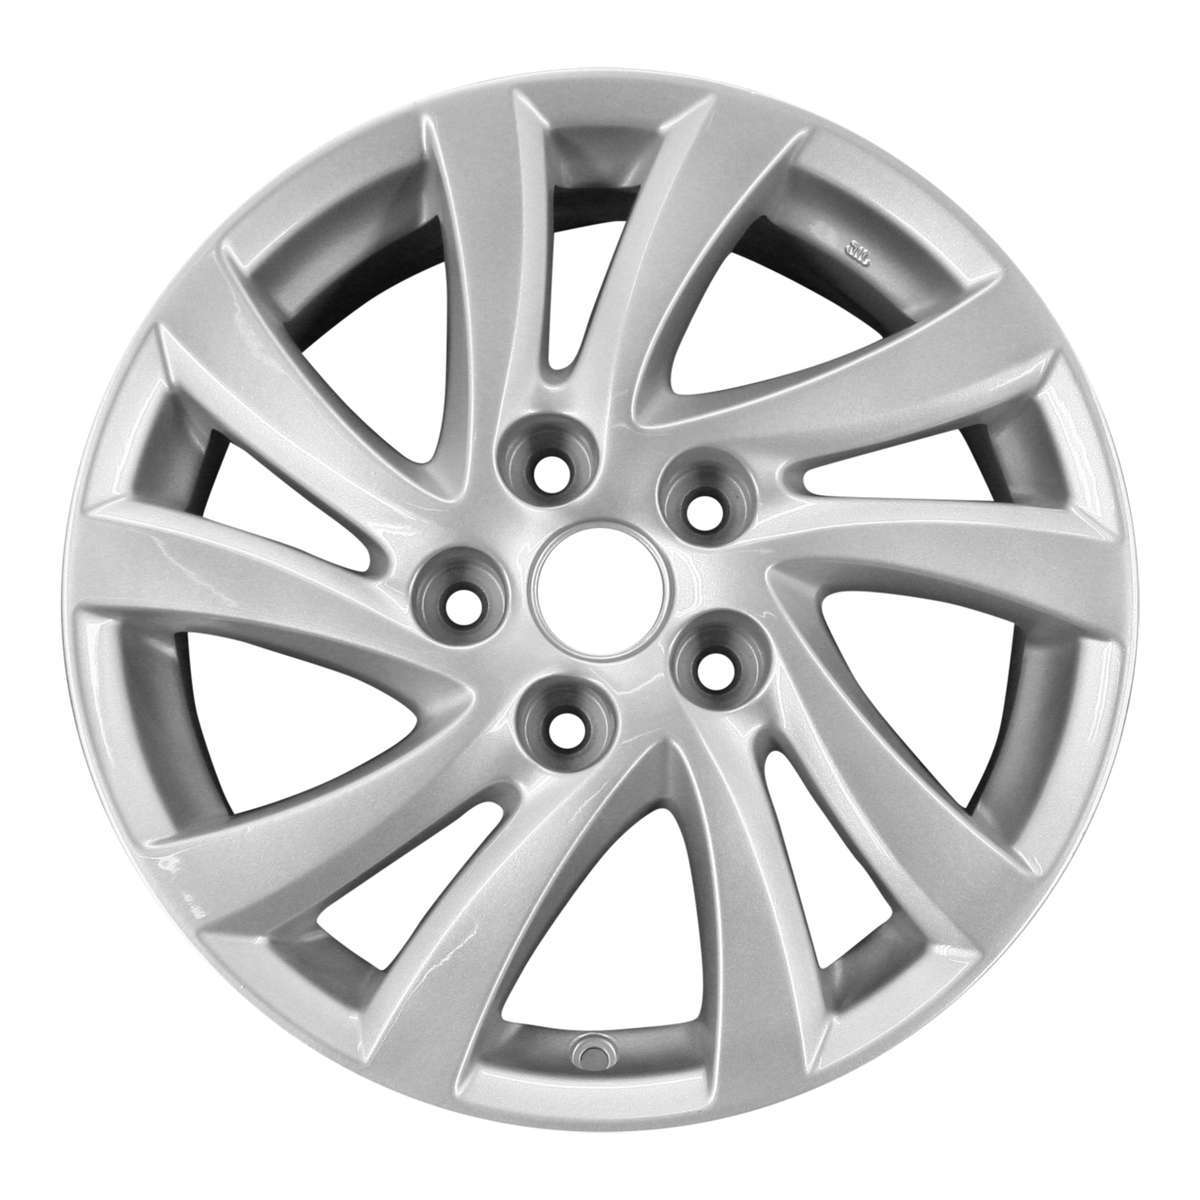 2013 Mazda 3 New 16" Replacement Wheel Rim RW64946S